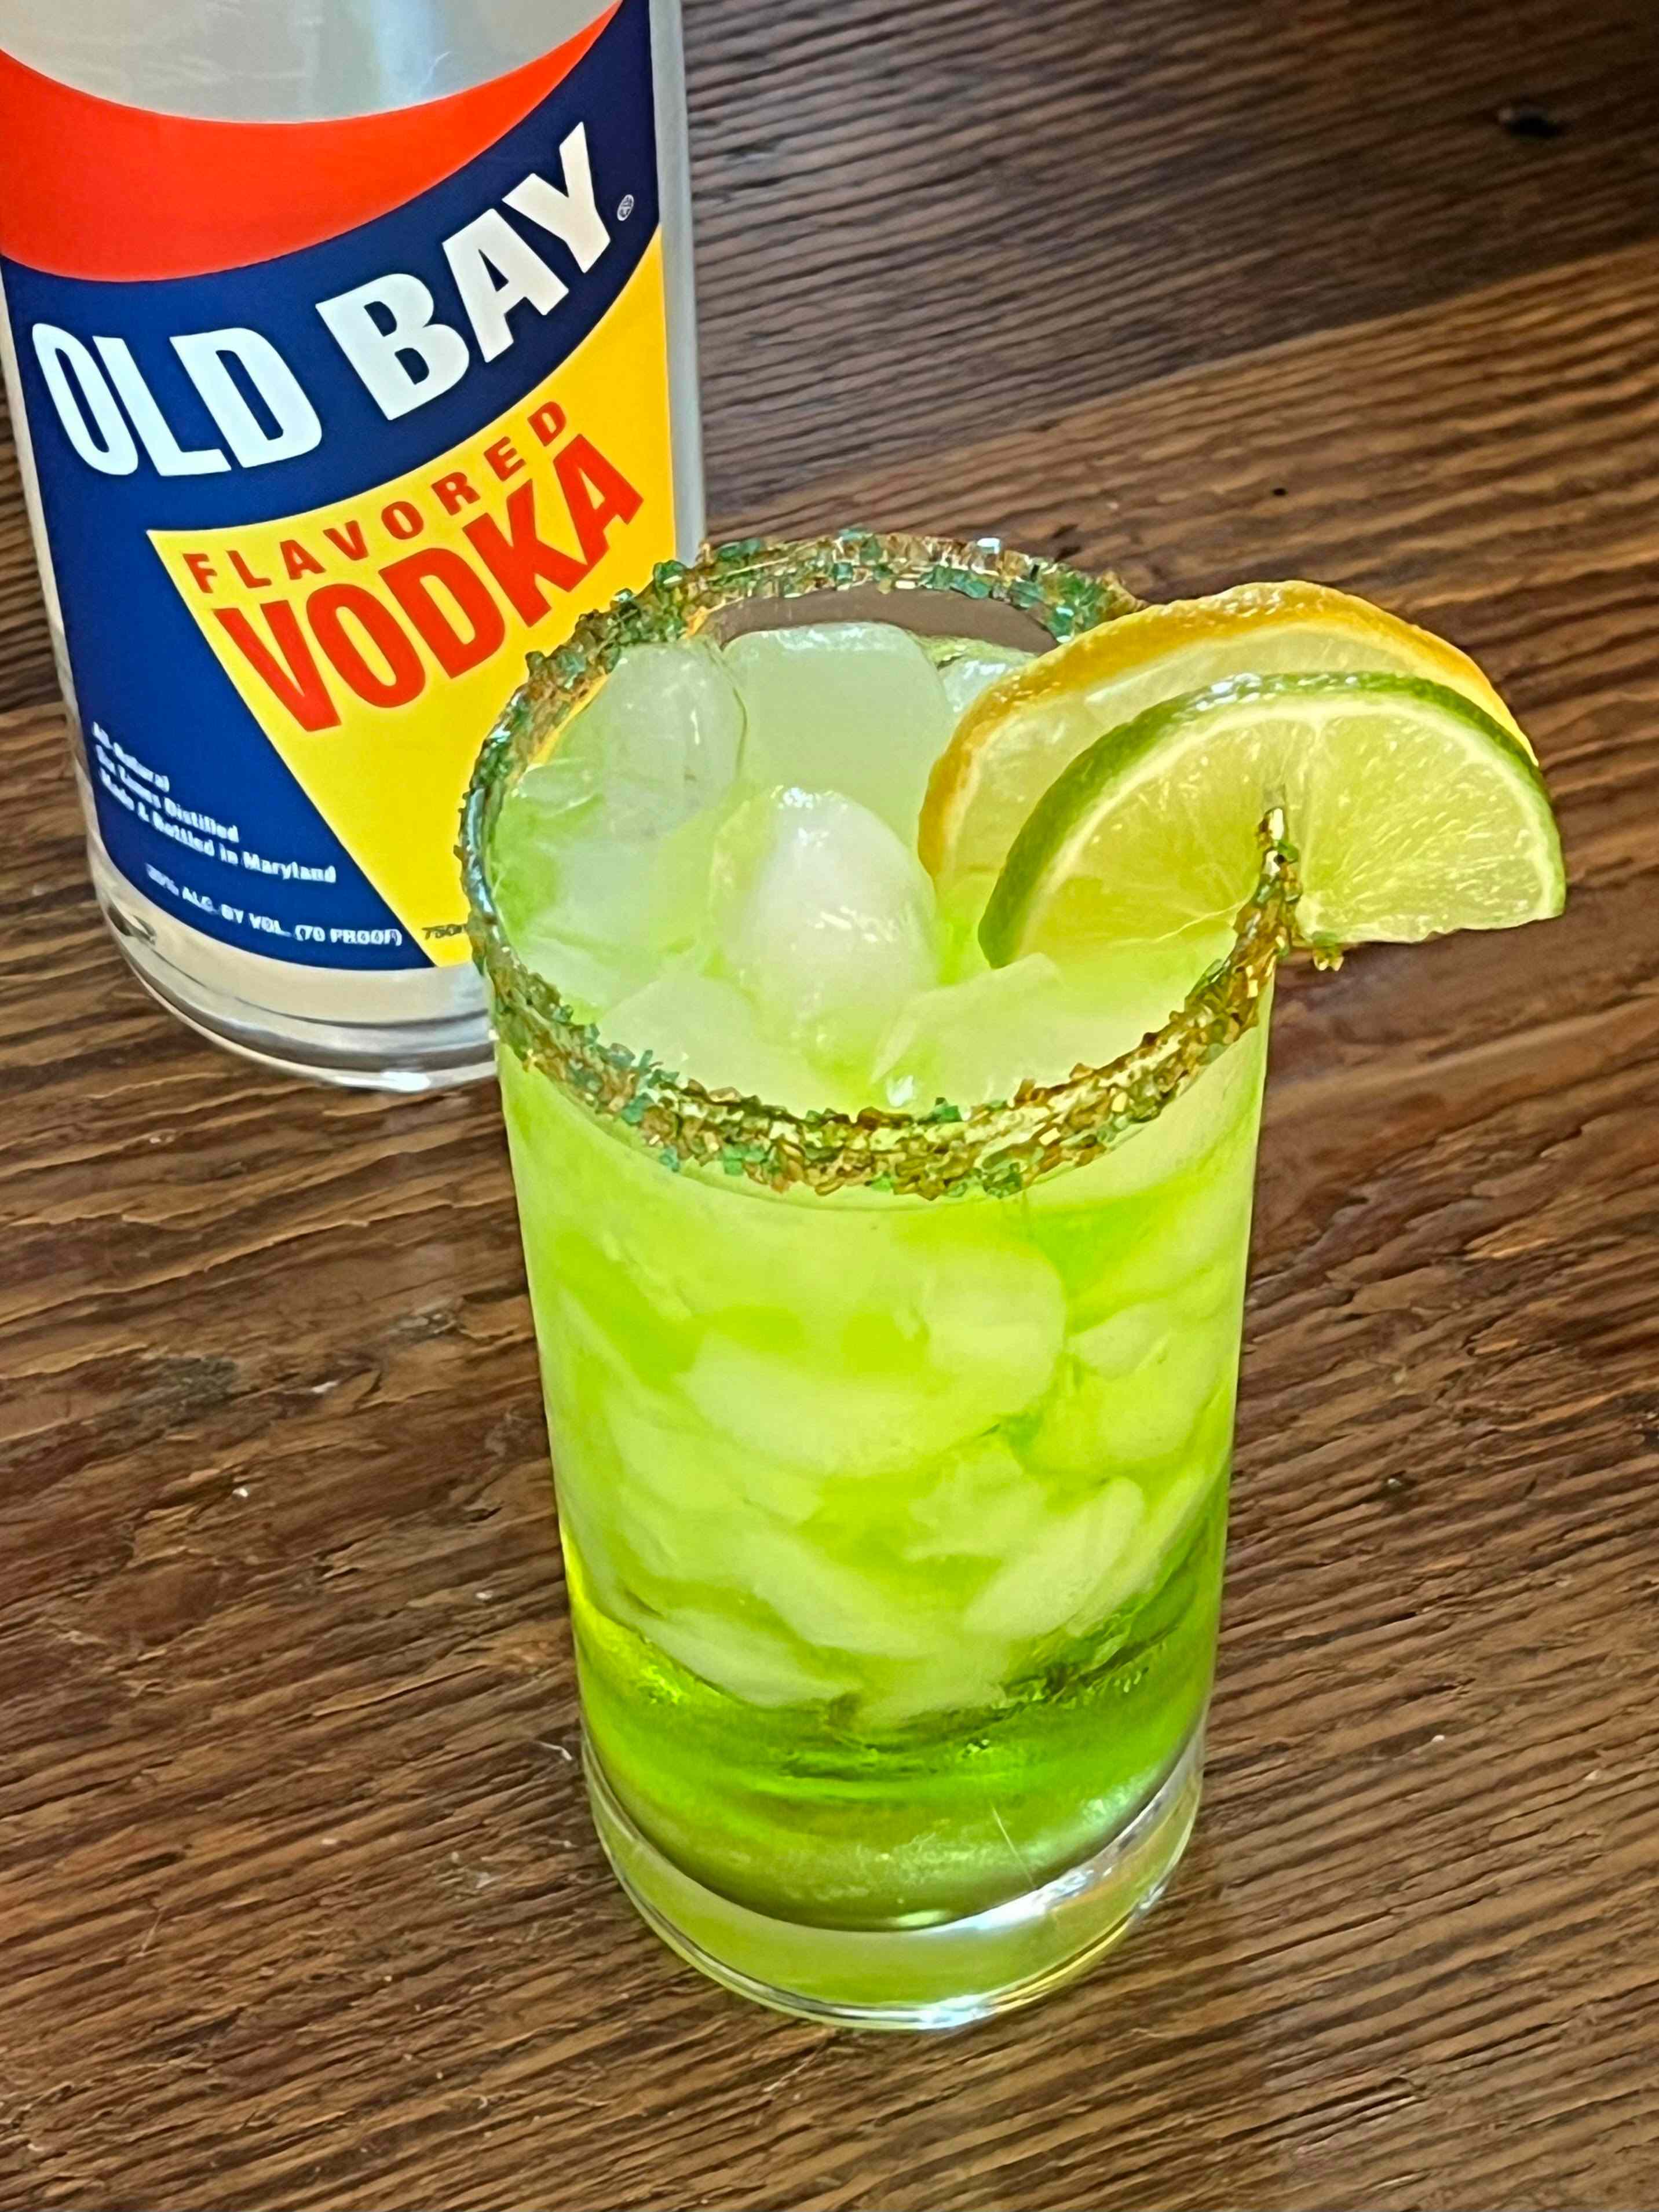 green cocktail with lemon lime slices and old bay vodka bottle